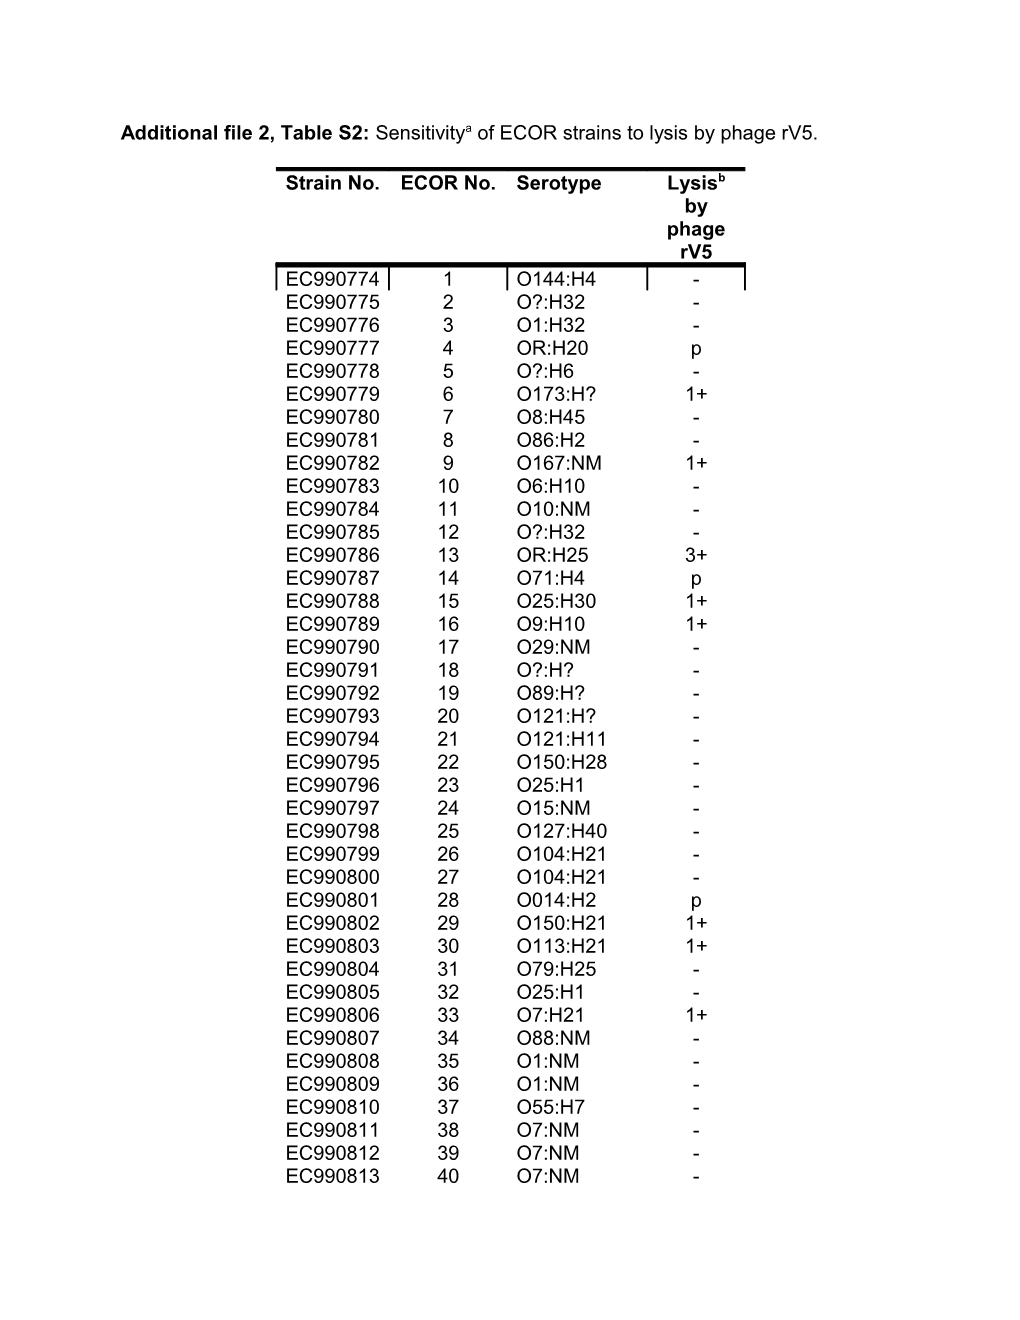 Additional File 2, Table S2: Sensitivitya of ECOR Strains to Lysis by Phage Rv5